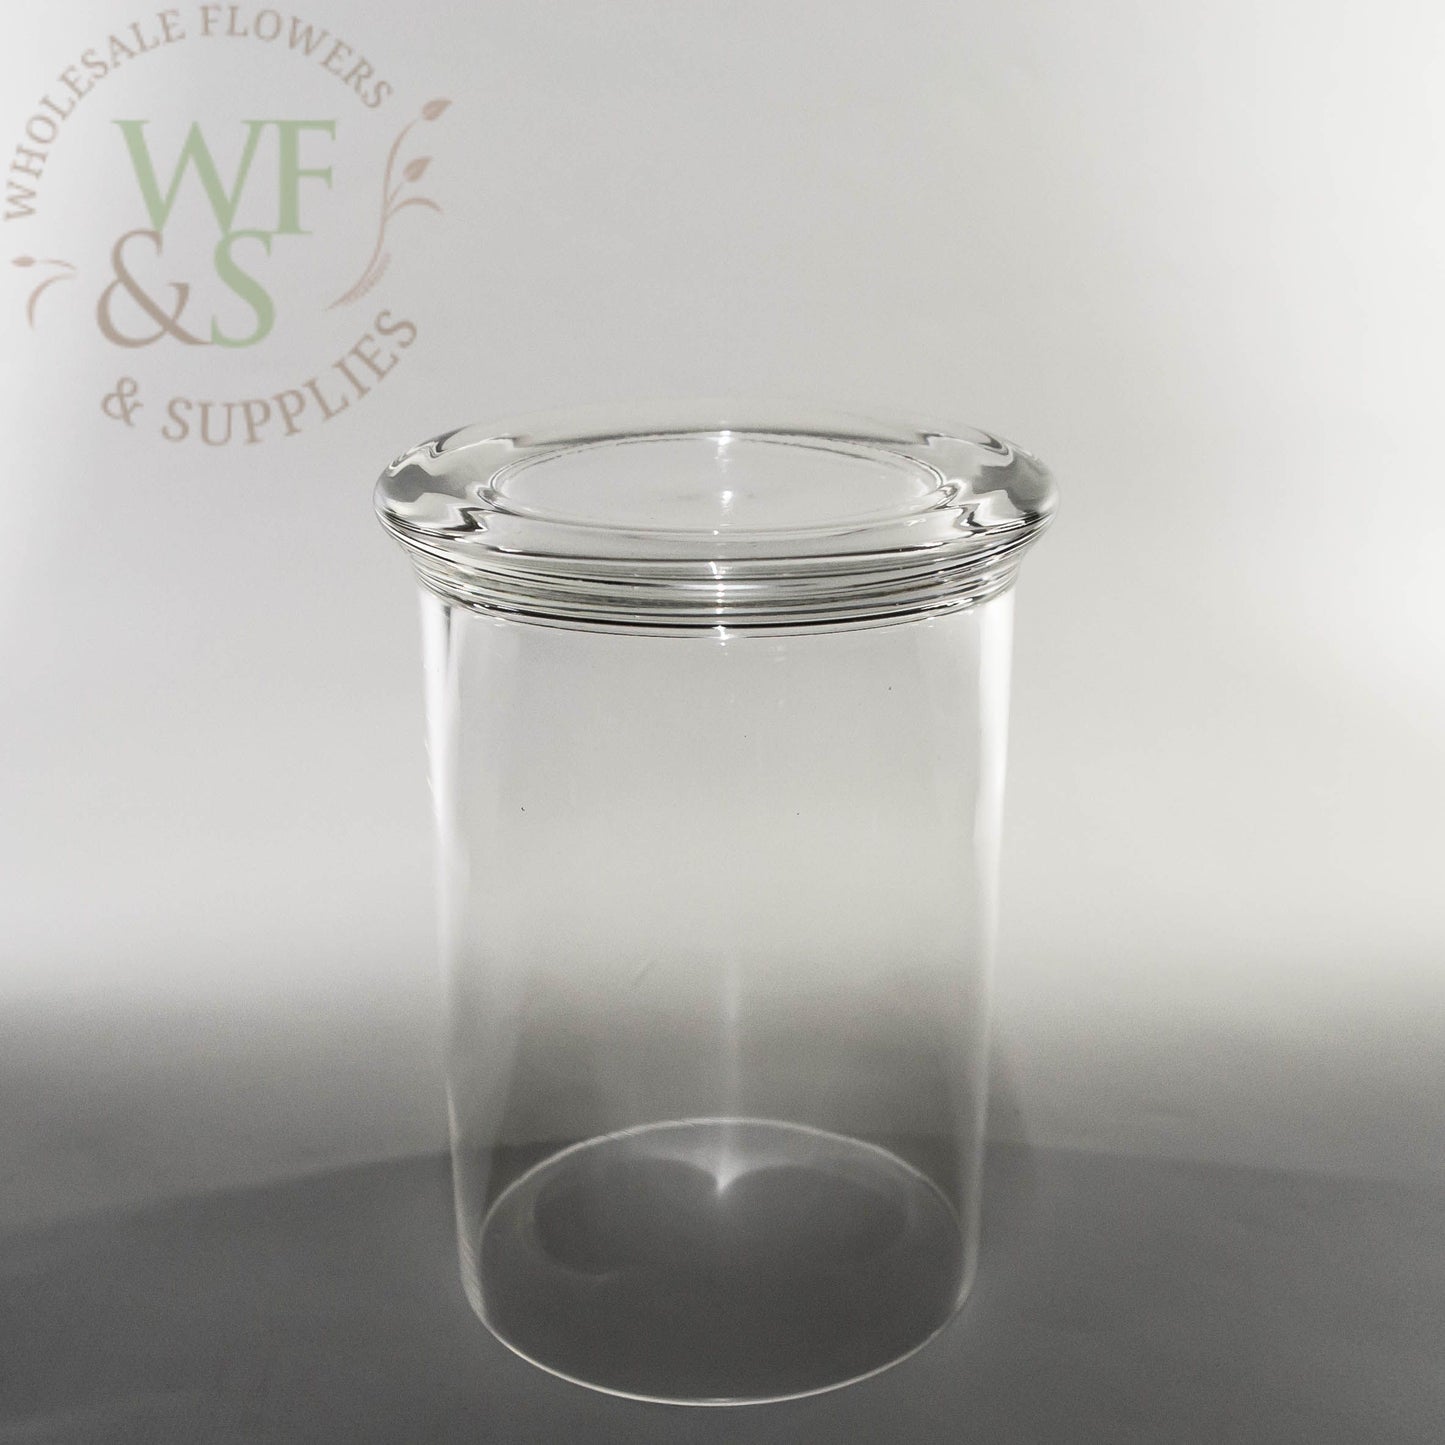 Glass Cylinder Candy Jar Vases with Lids Set of 3